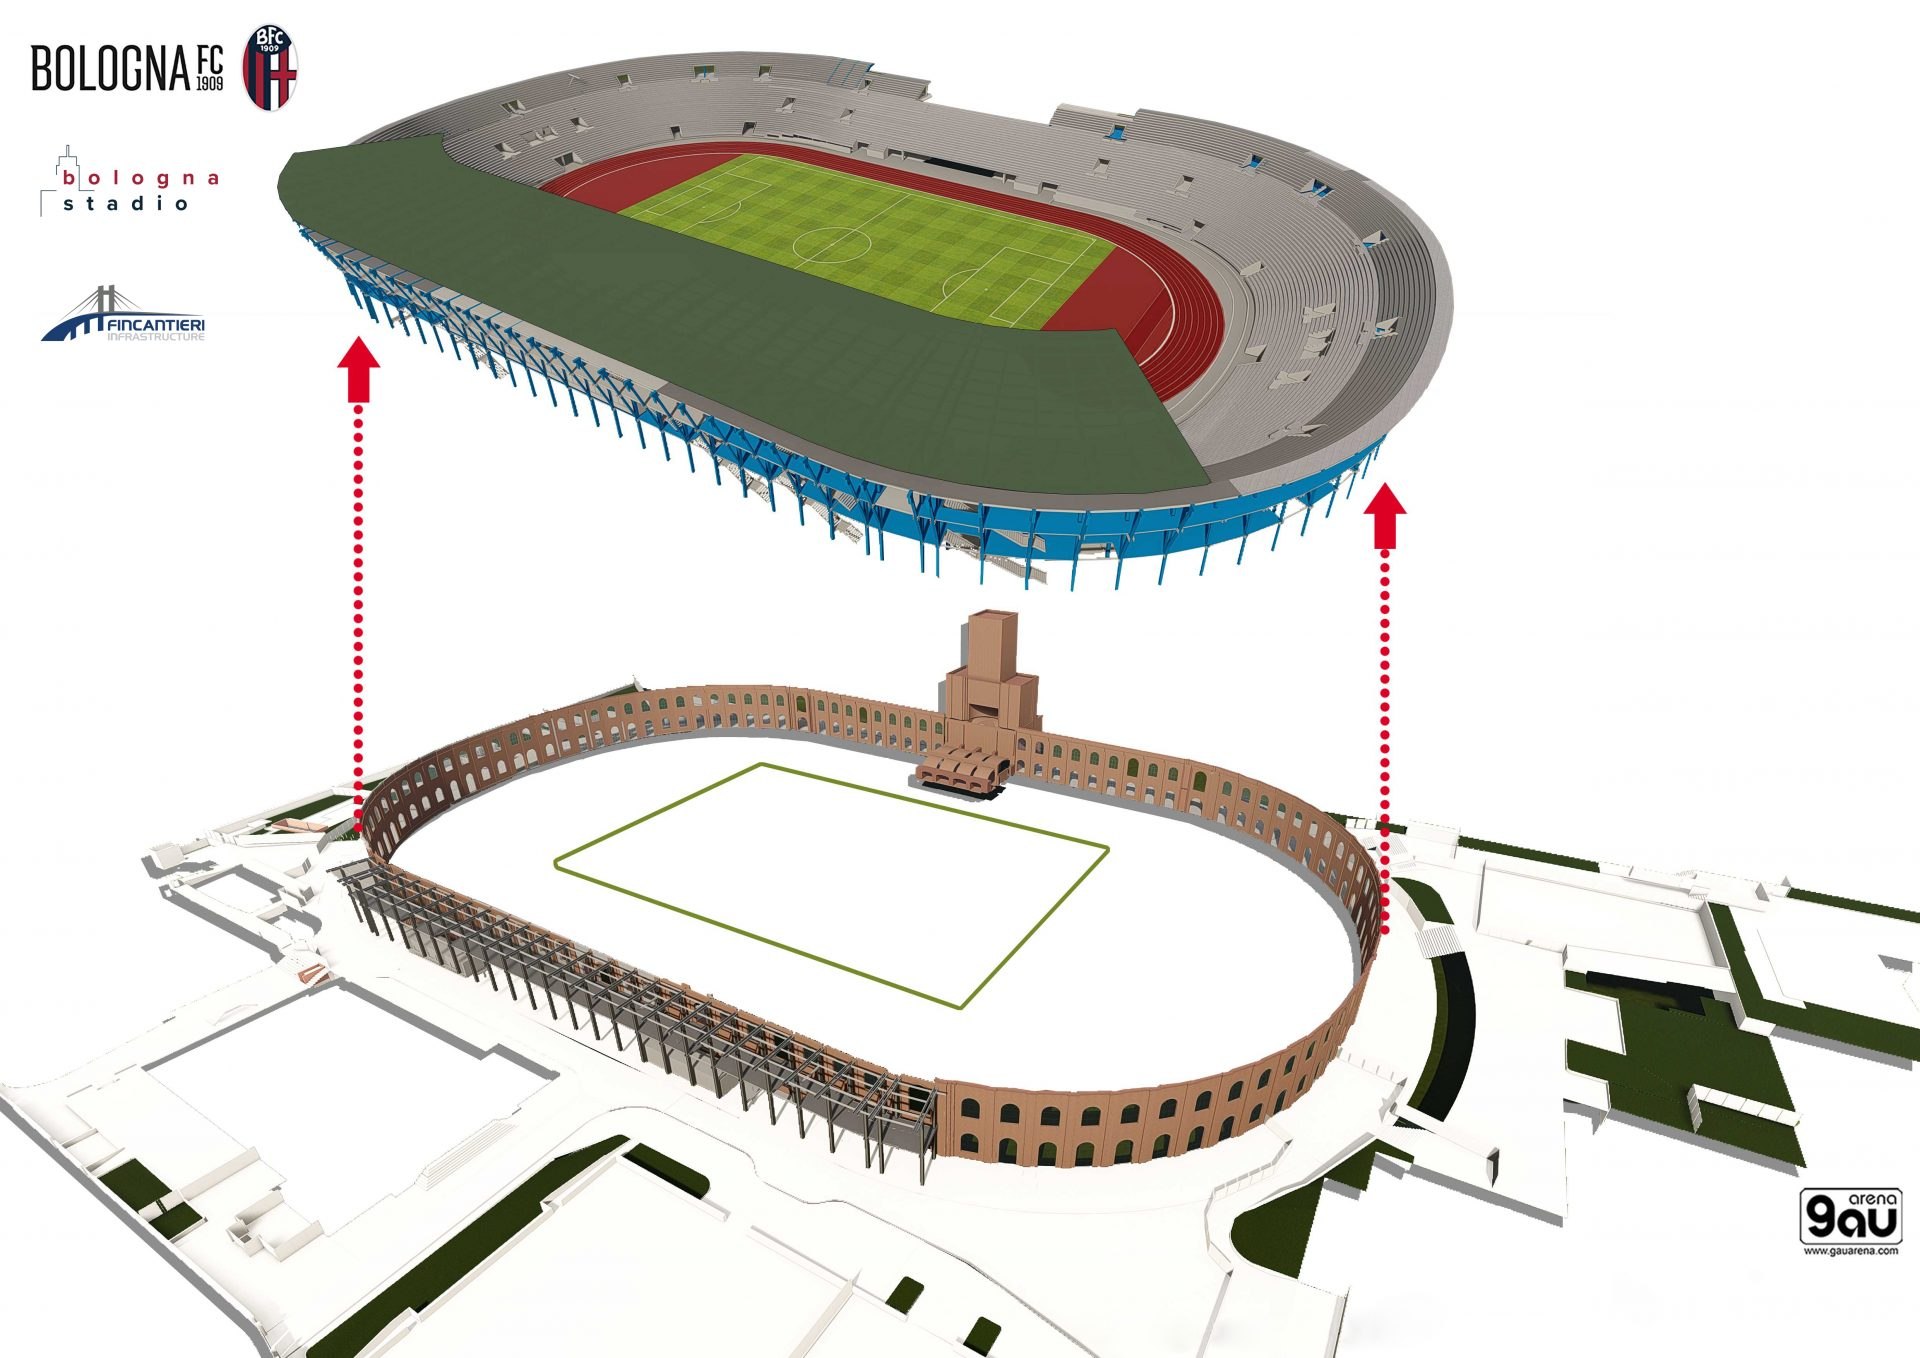 Развитие стадиона